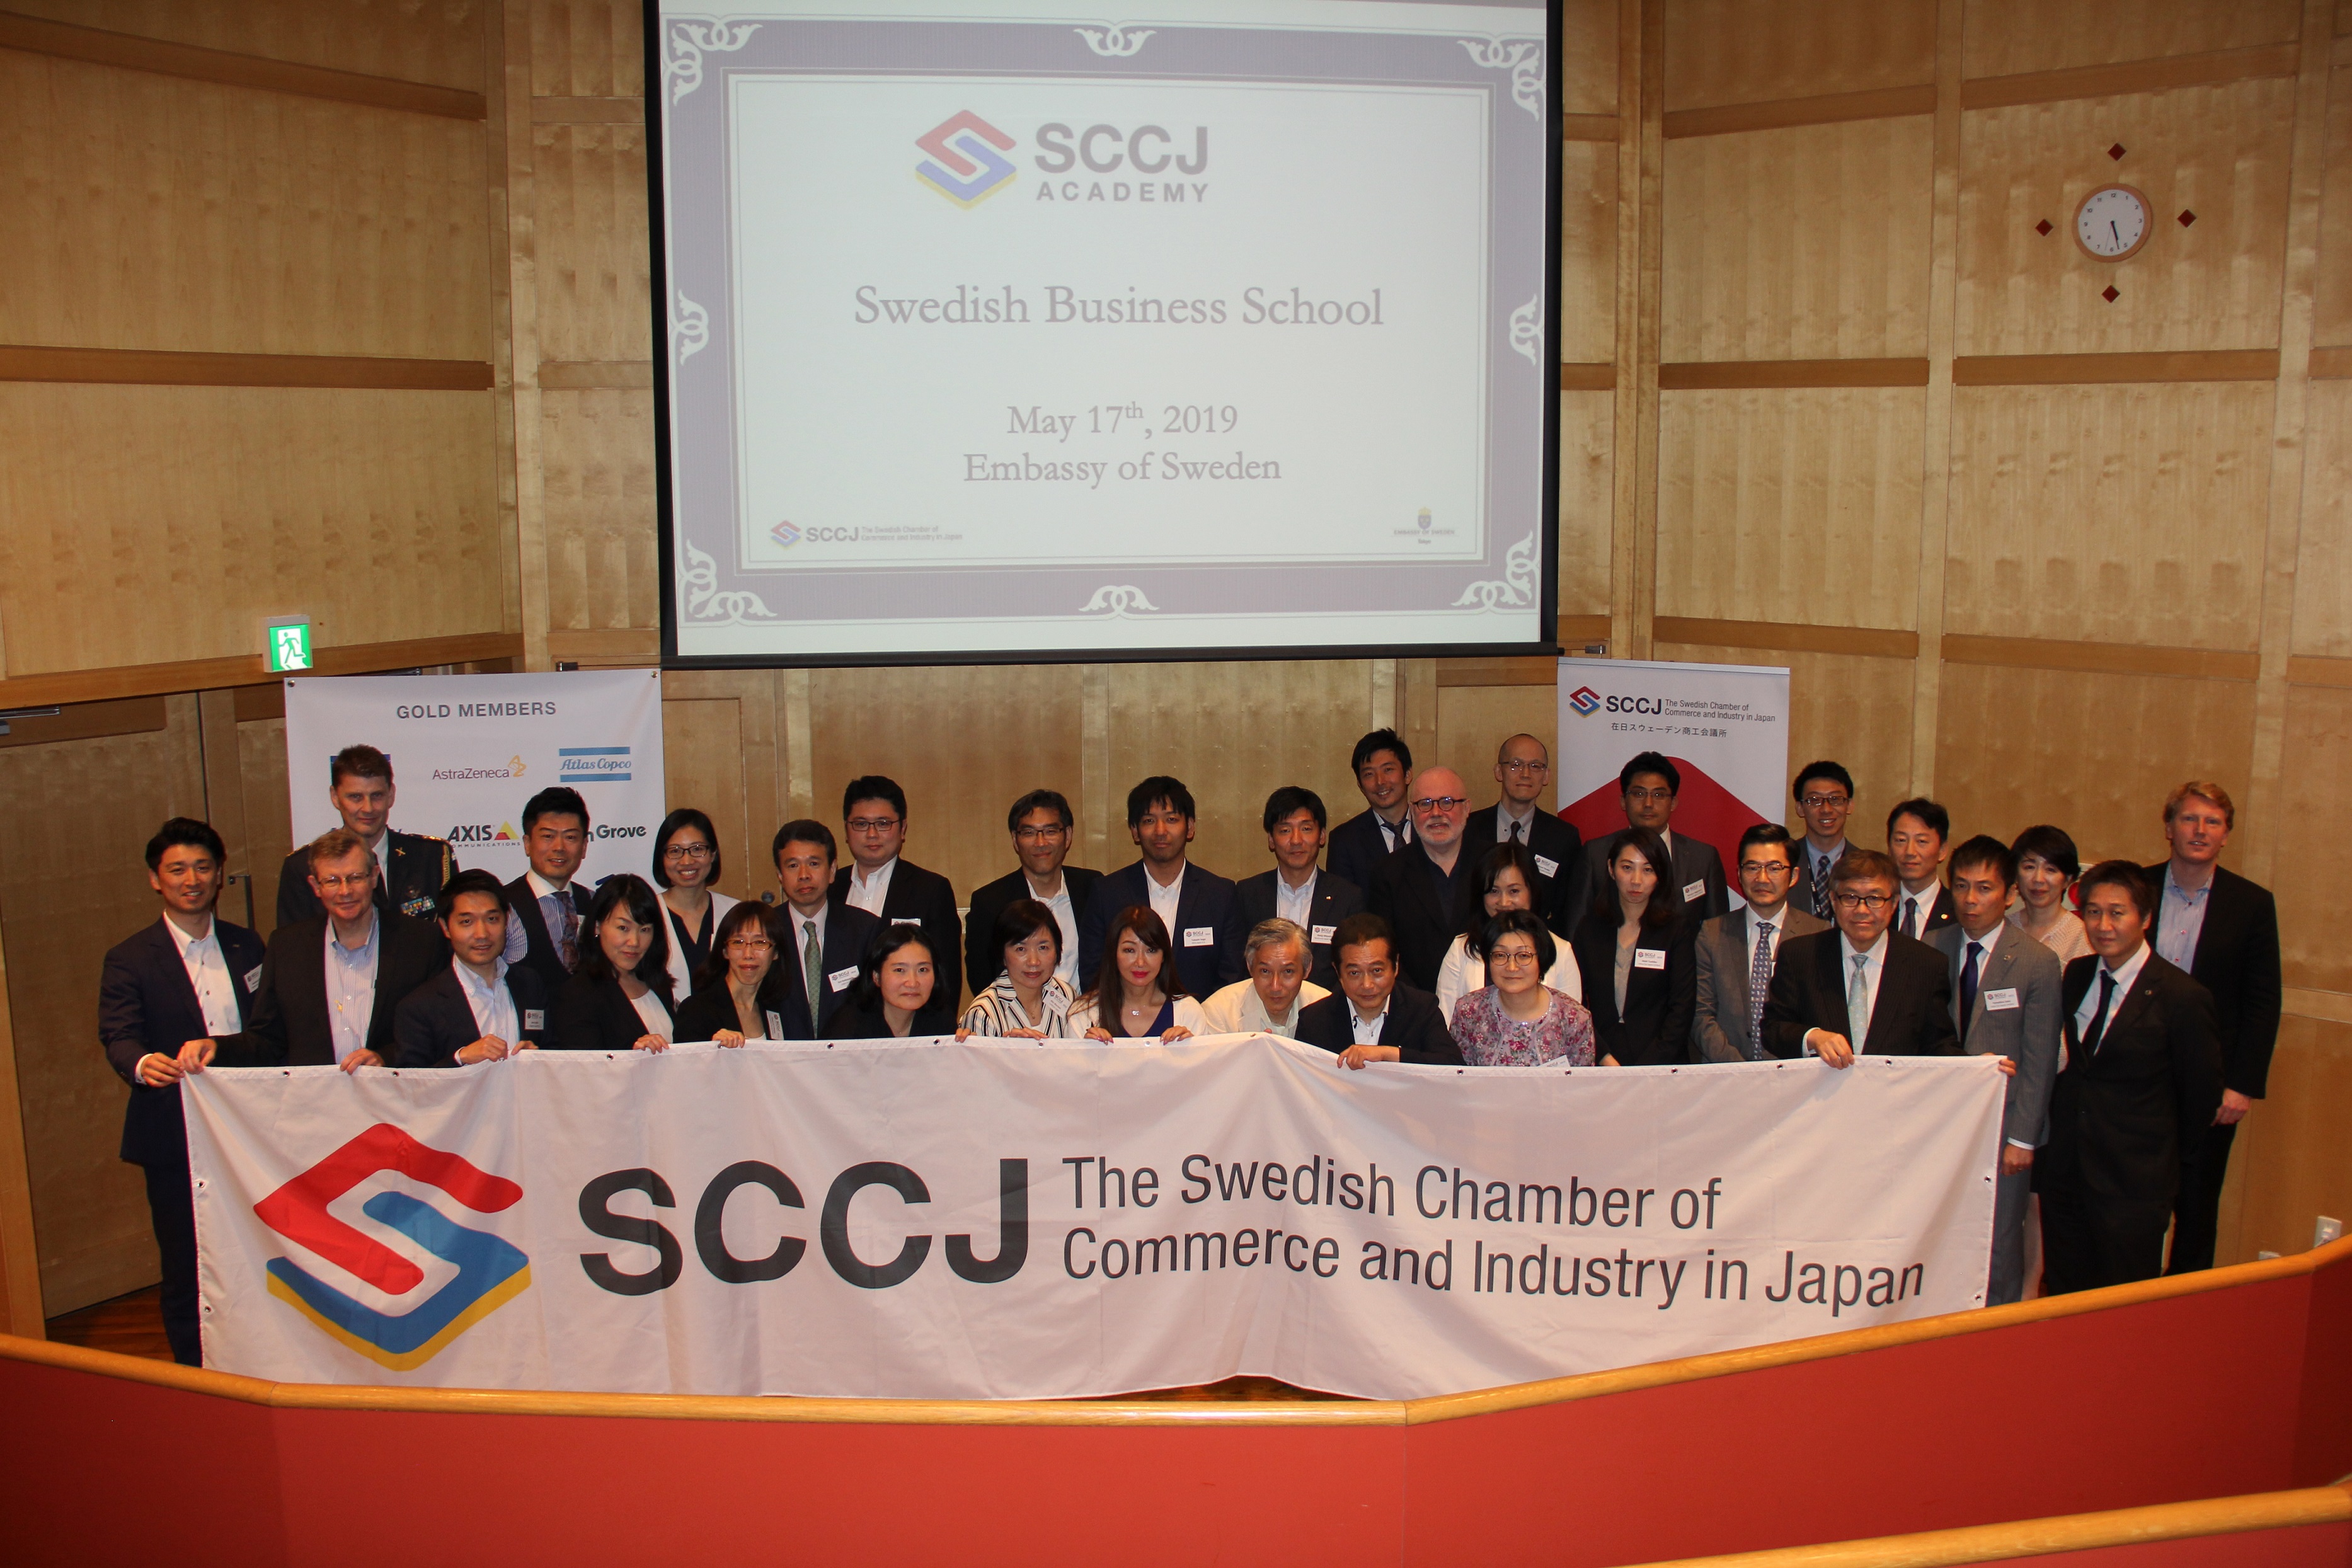 Report: SCCJ Academy - Swedish Business School 2019 Spring